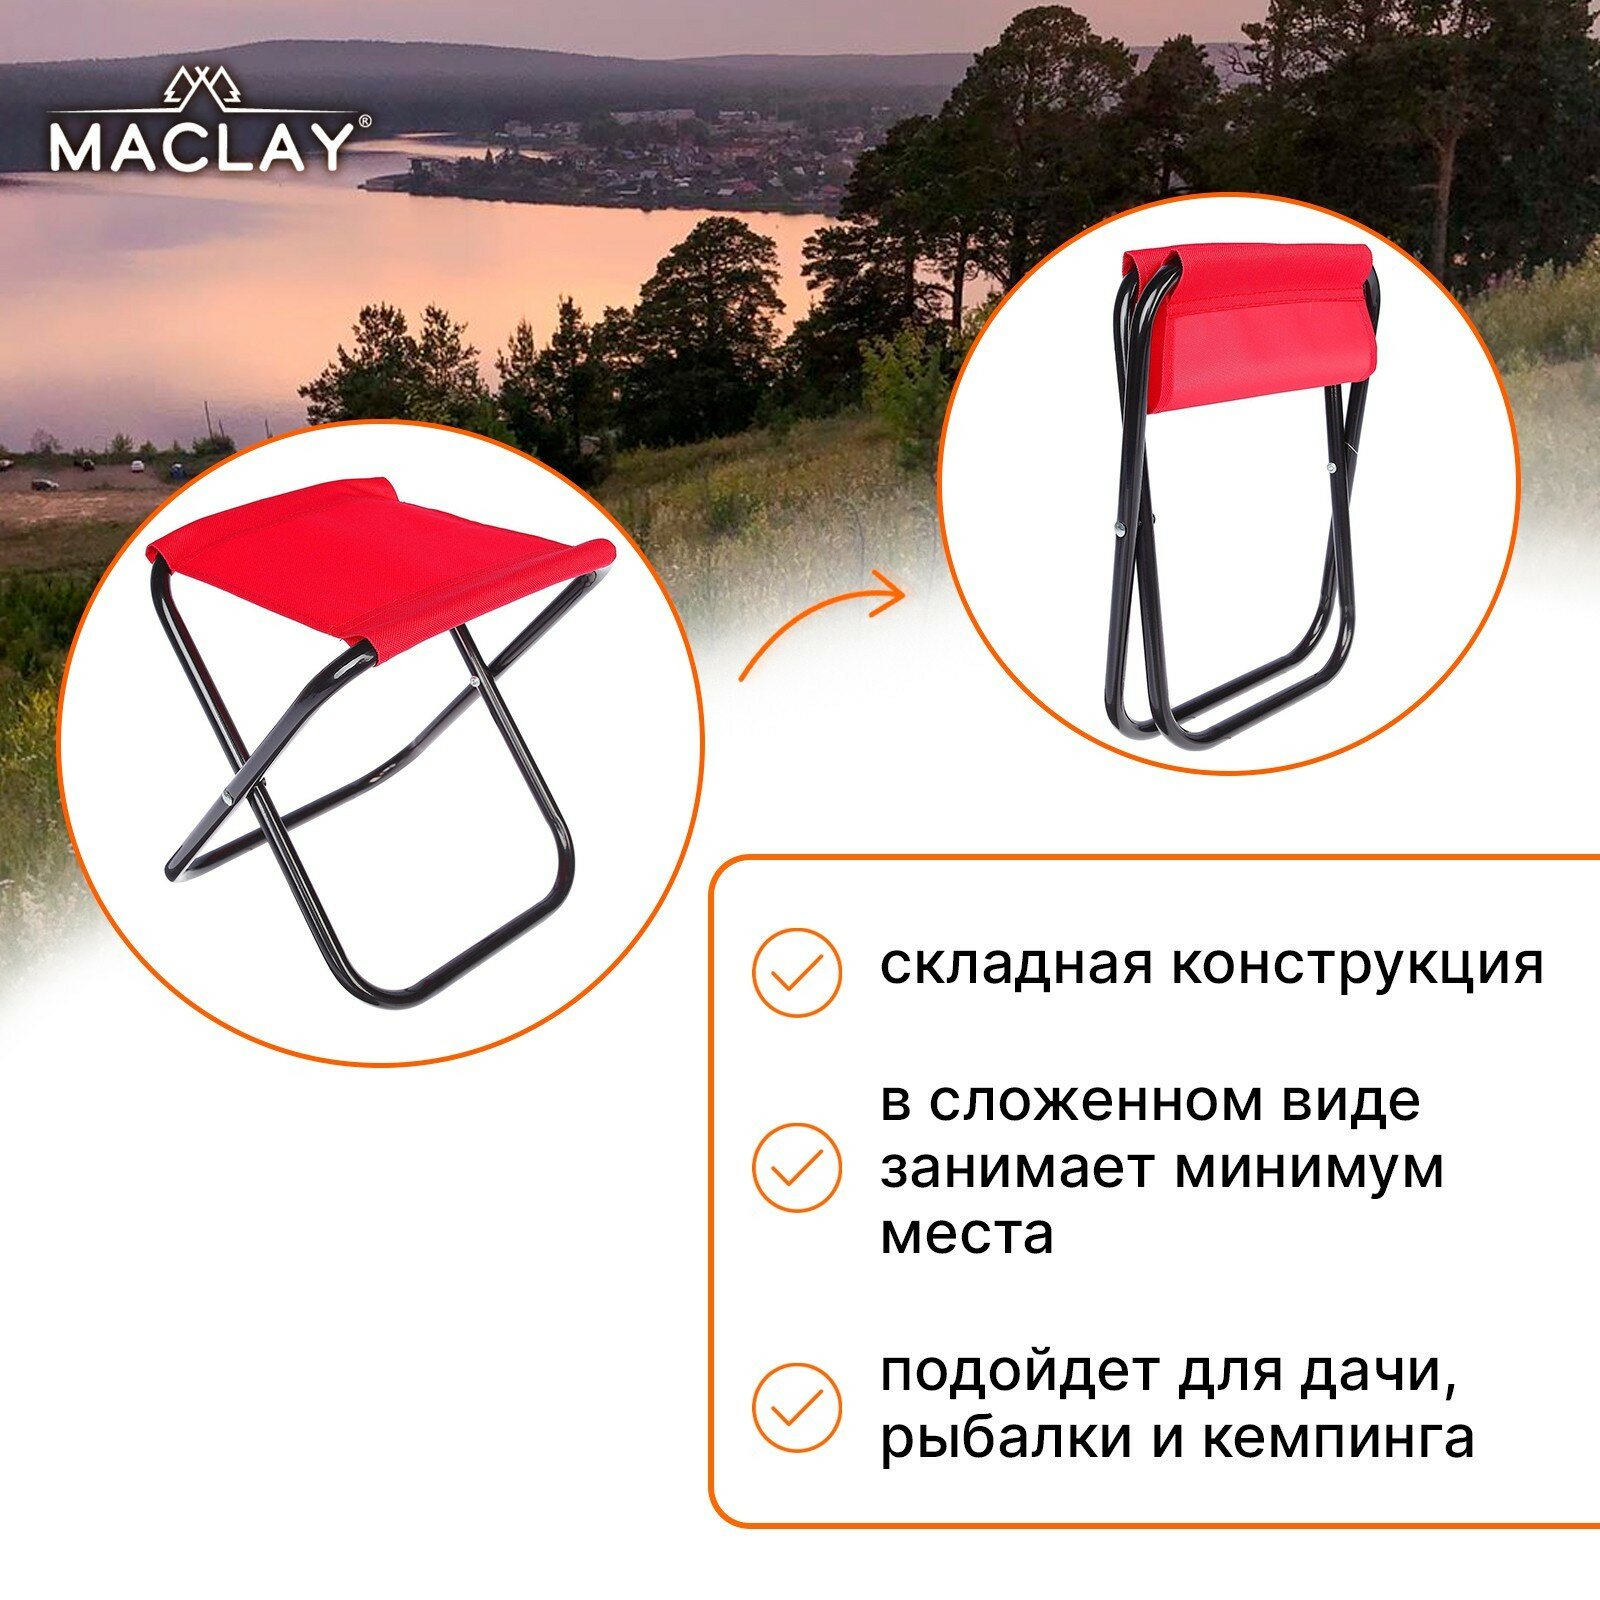 Стул Maclay, туристический, складной, размер 22 х 20 х 25 см, до 60 кг, цвет красный